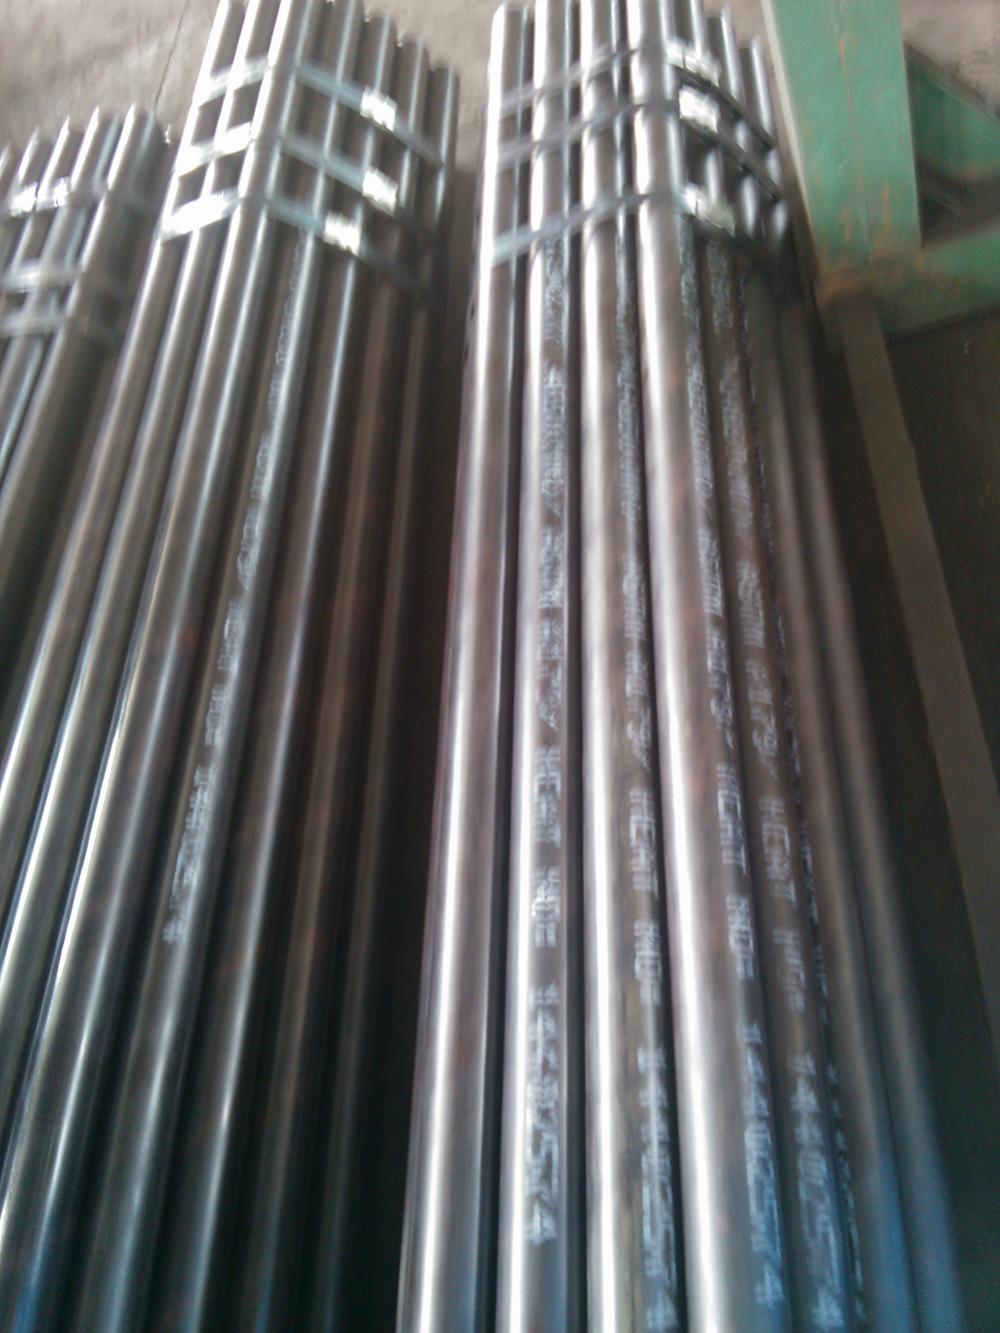 ASTM A213 Seamless Stahlrohr für Kessel